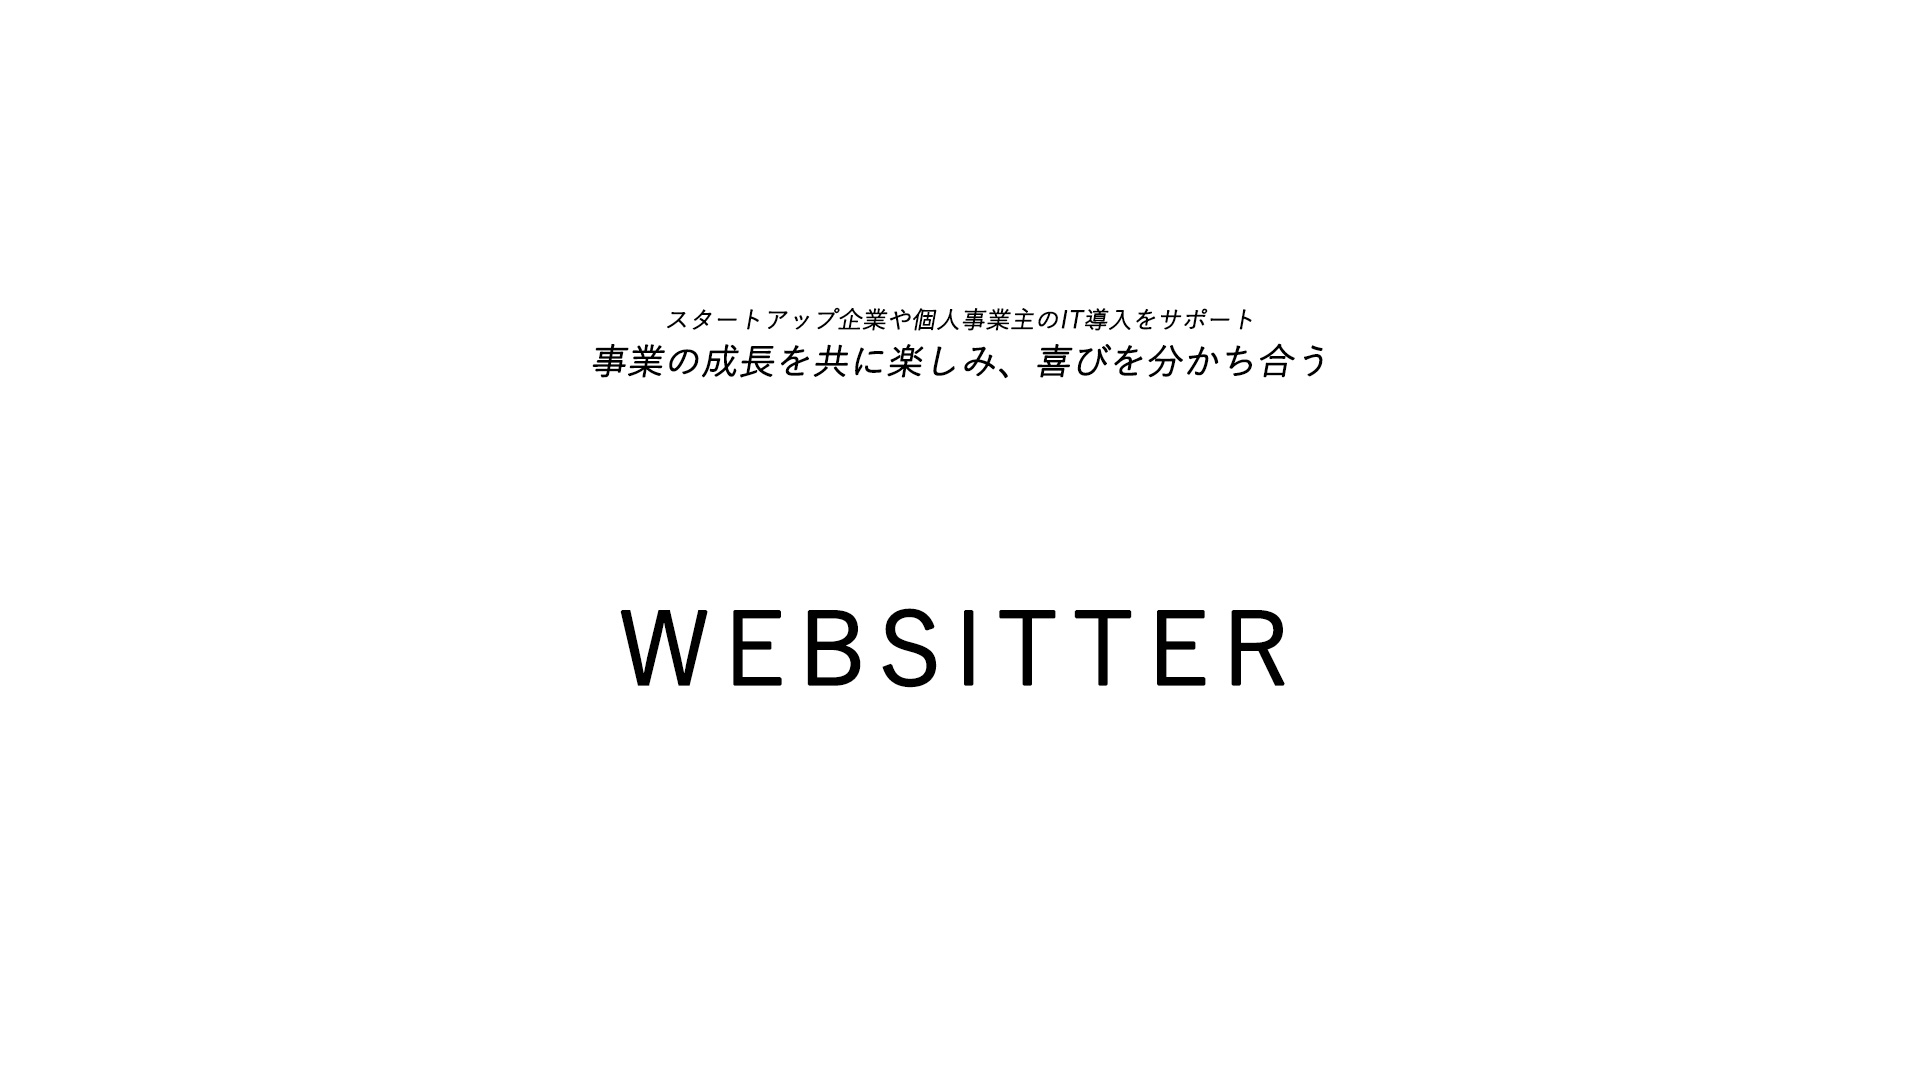 WEBSITTER